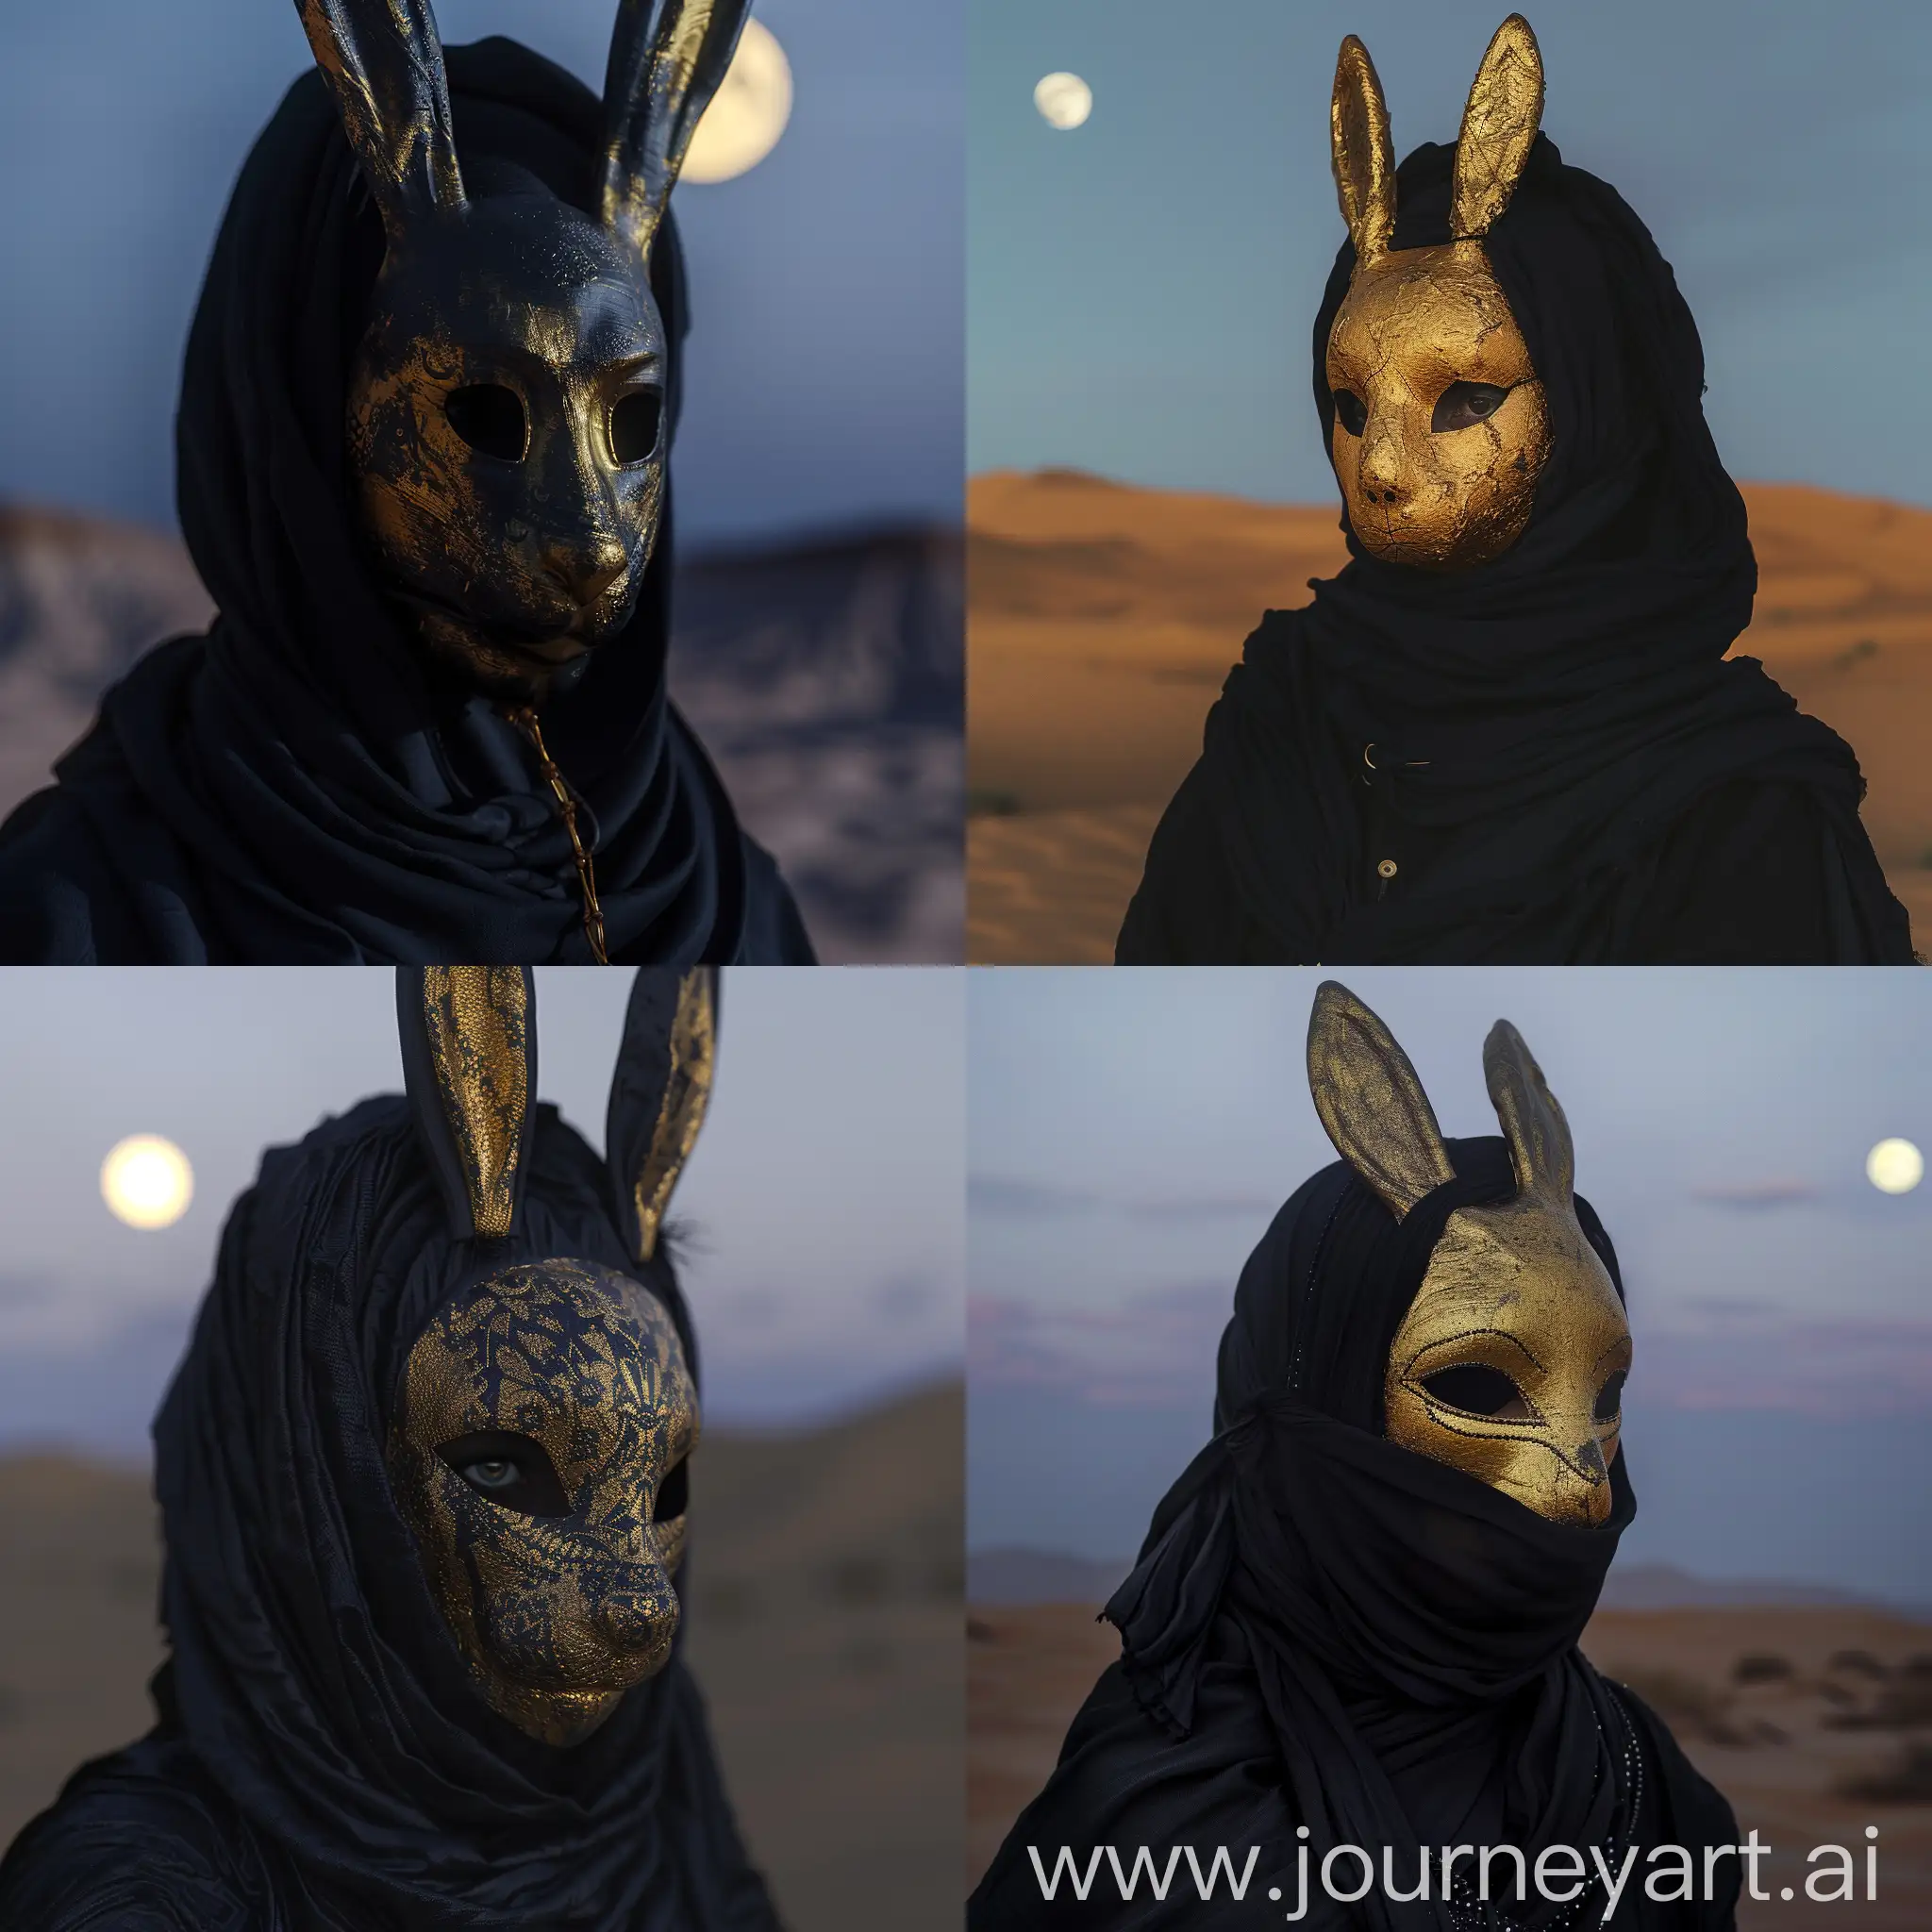 Nighttime-Desert-Scene-with-Black-Kufiya-and-Golden-Rabbit-Mask